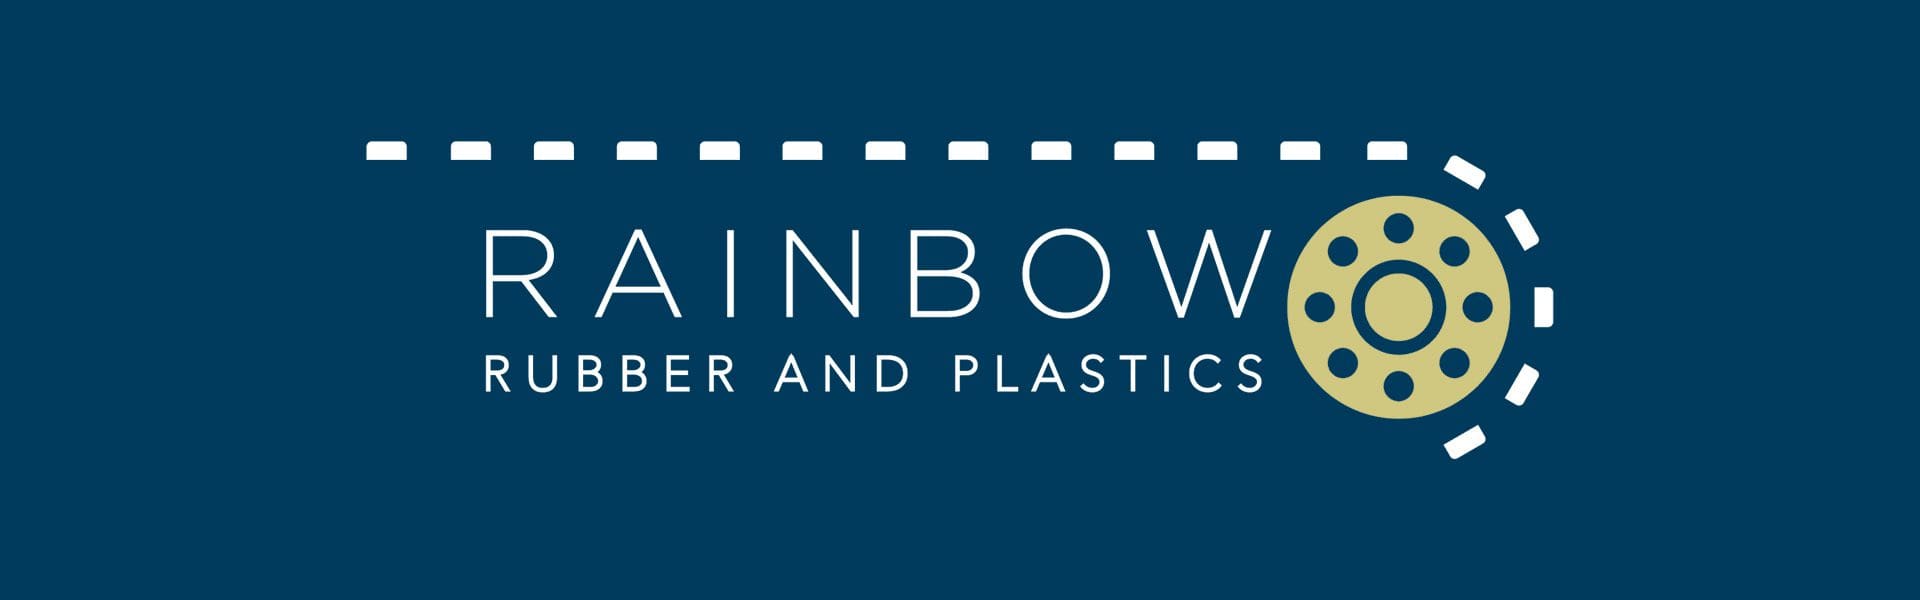 Rainbow Rubber and Plastics logo wide